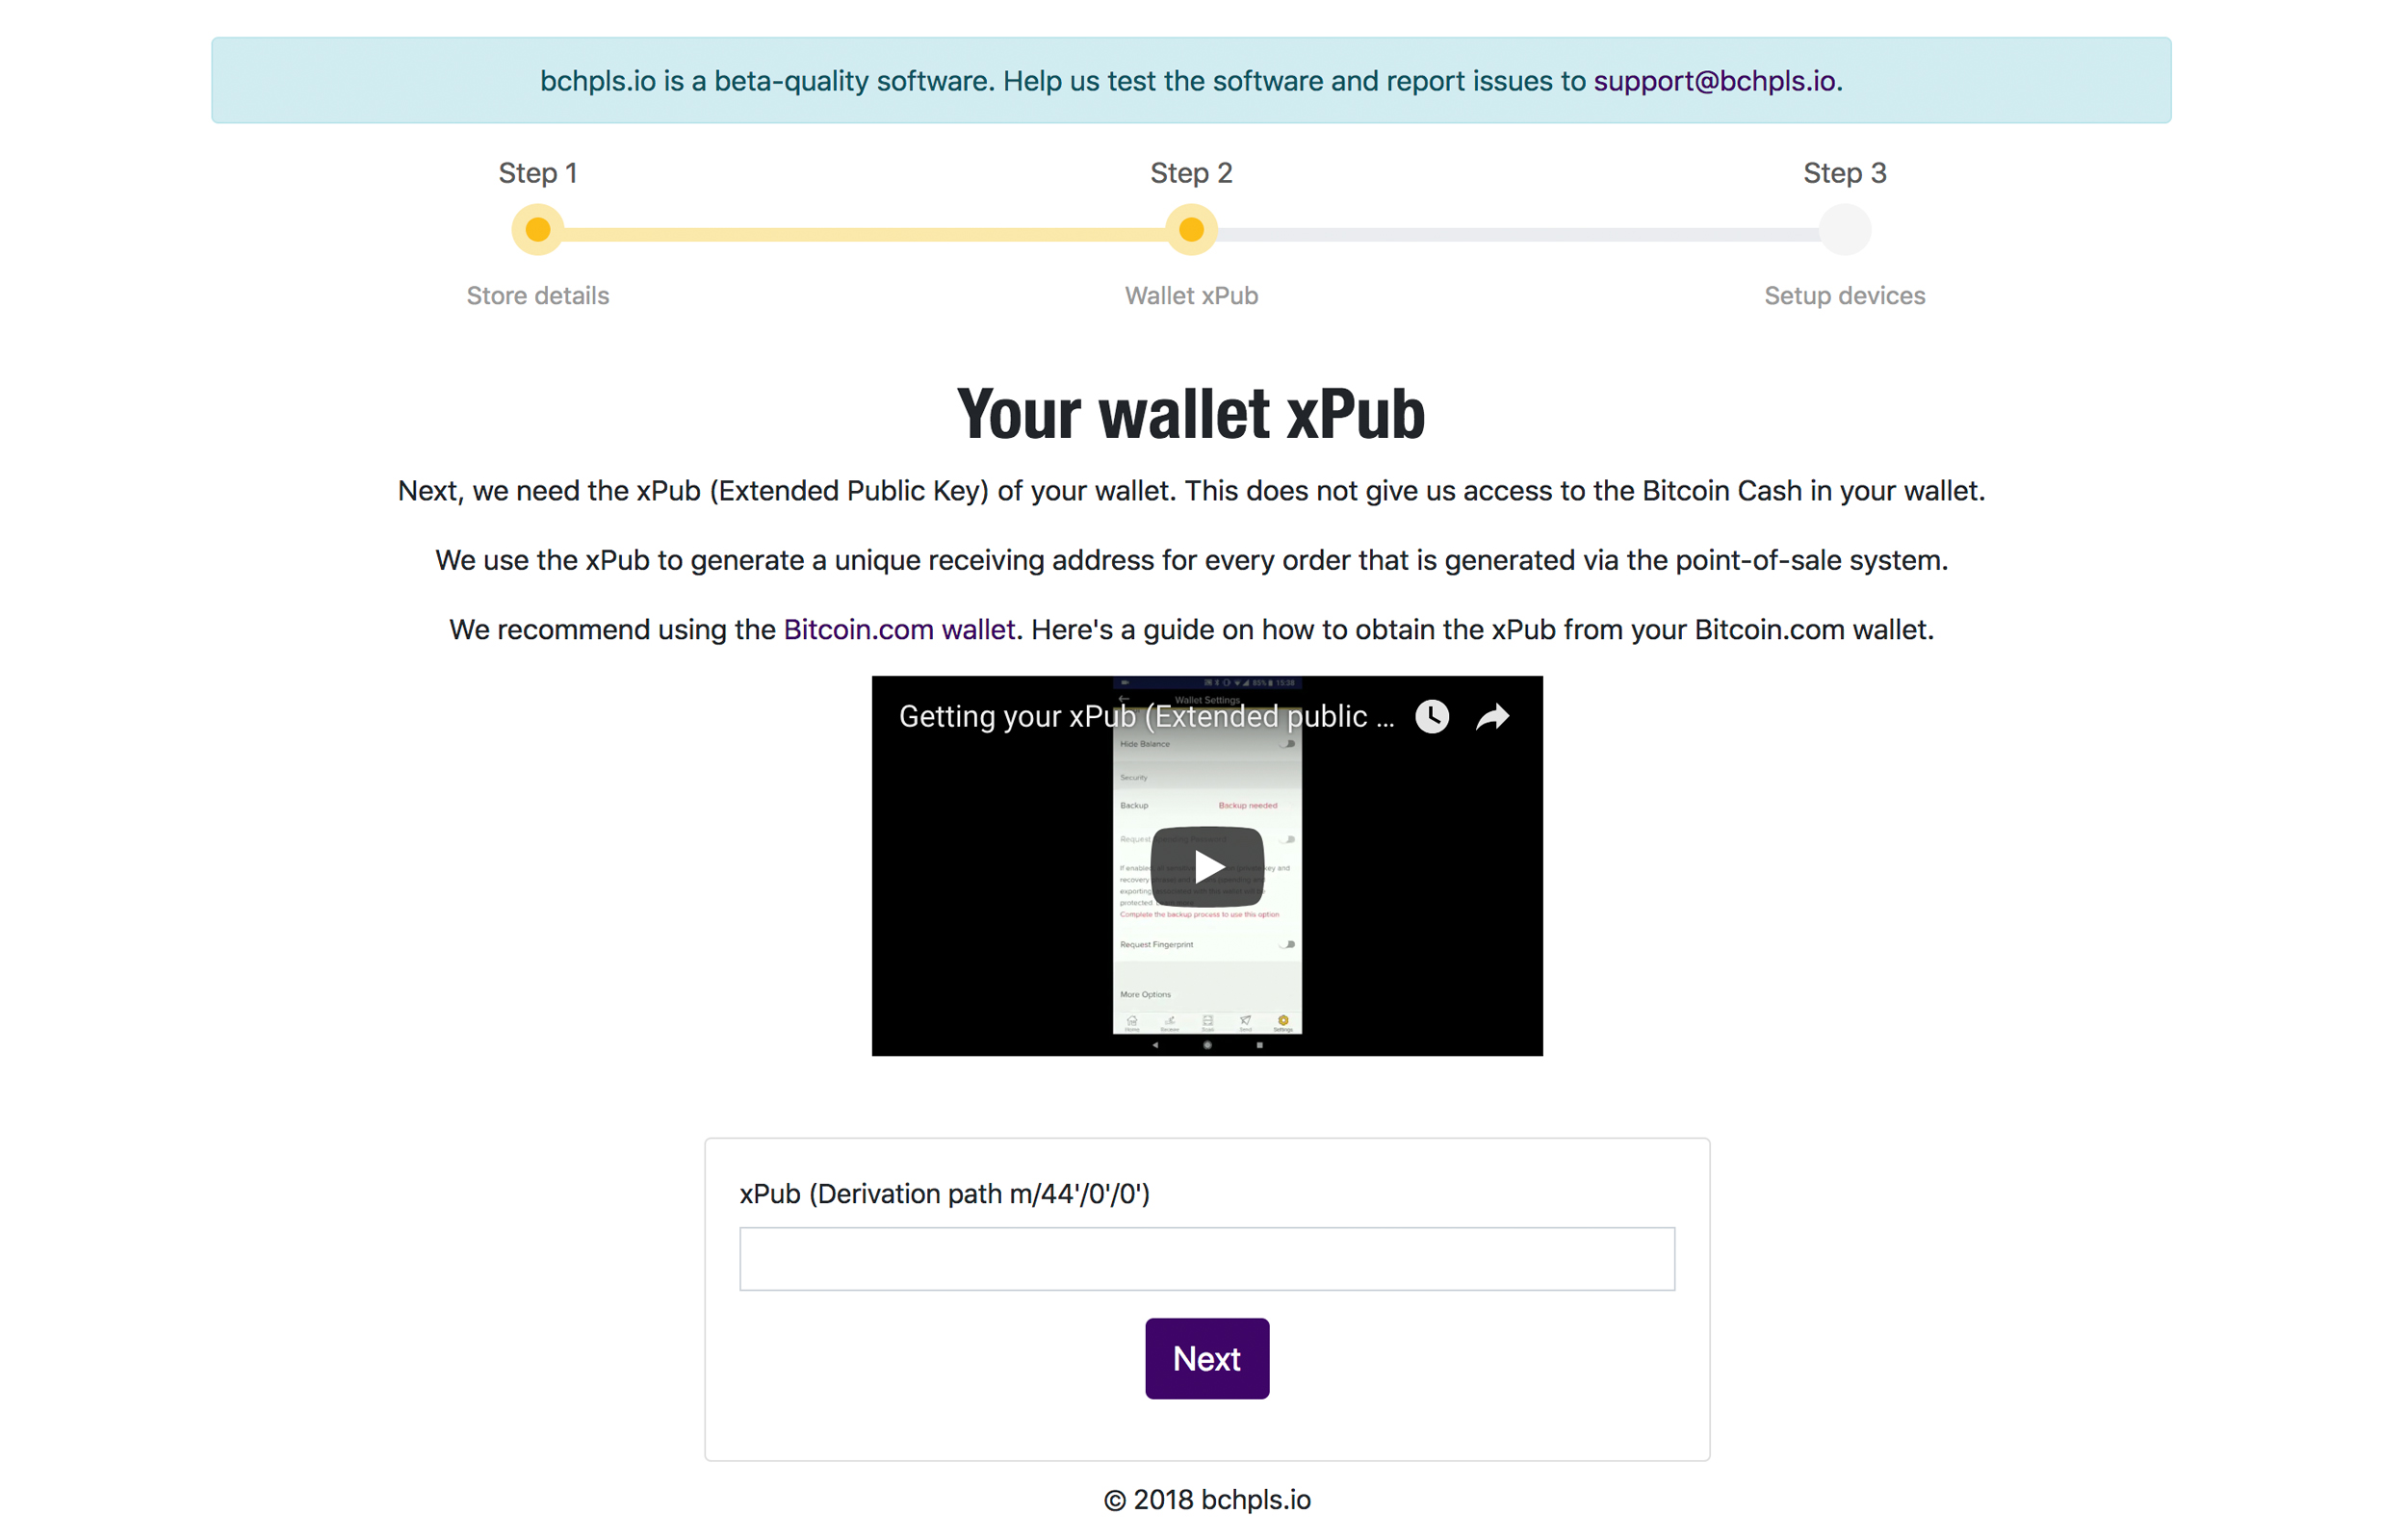 Bchpls.io Enables Free Bitcoin Cash Point-of-Sale Platform 